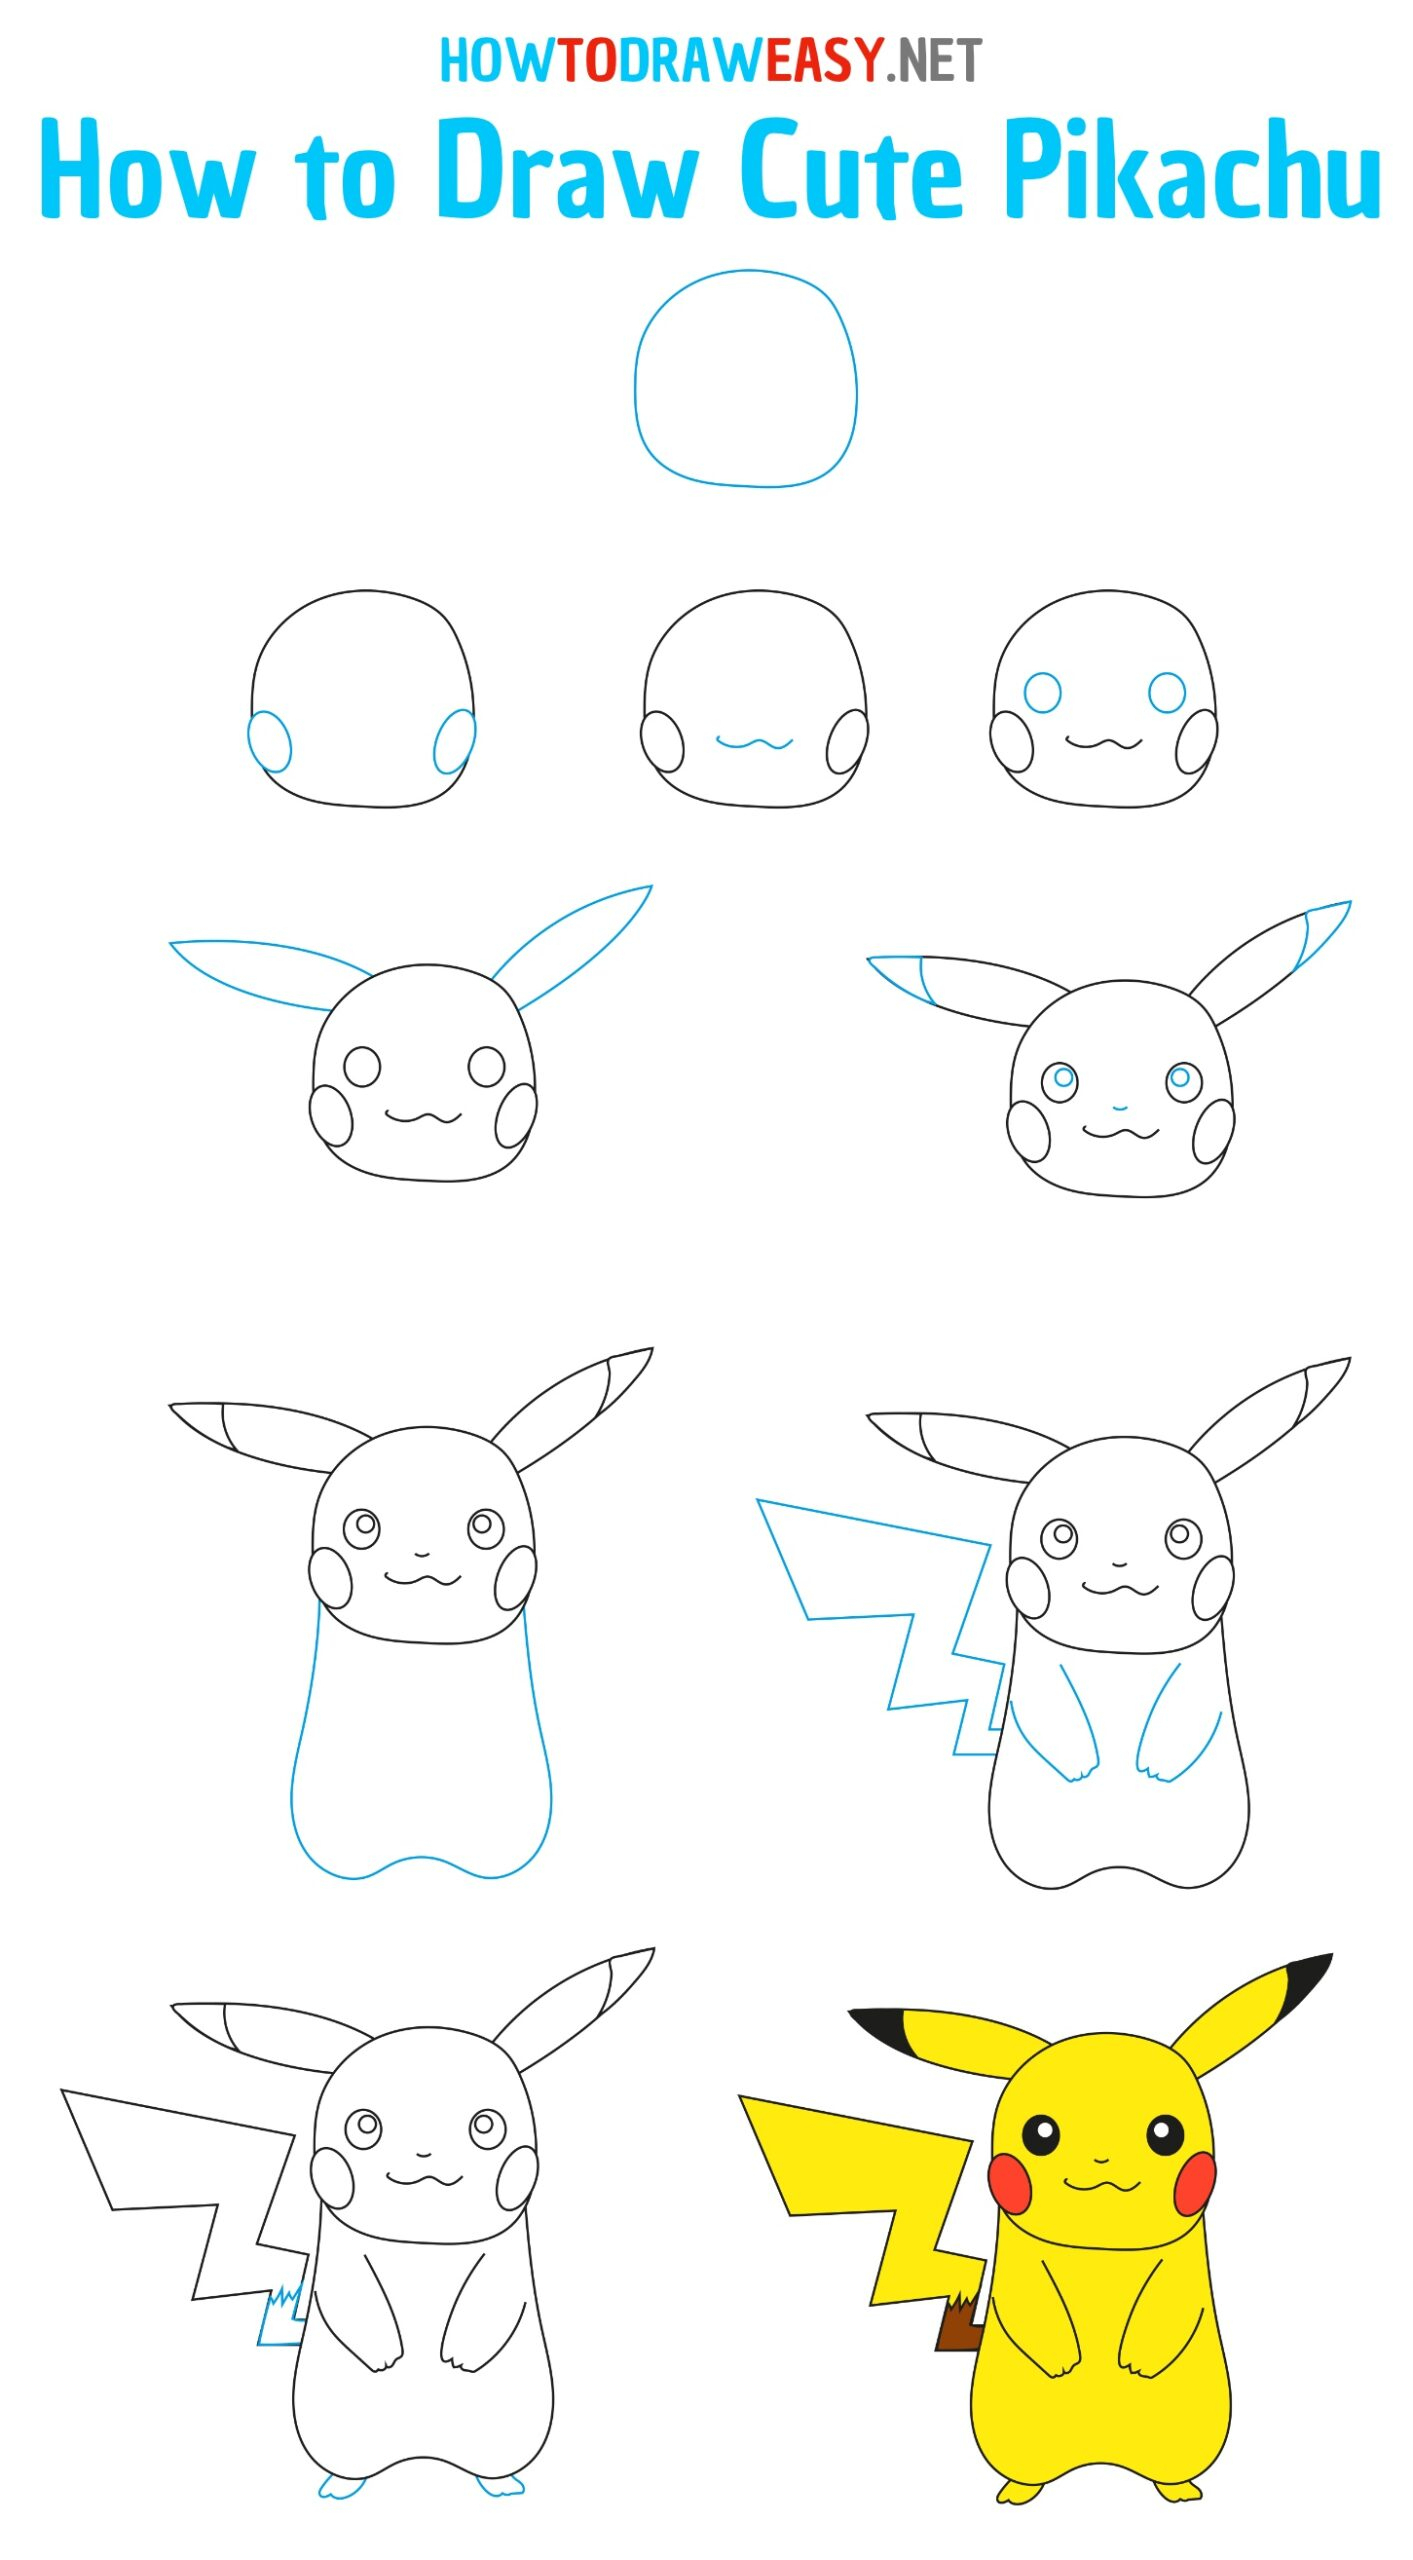 How To Draw Pikachu Easy - How To Draw Easy dedans Dessin Facile Pikachu génial 